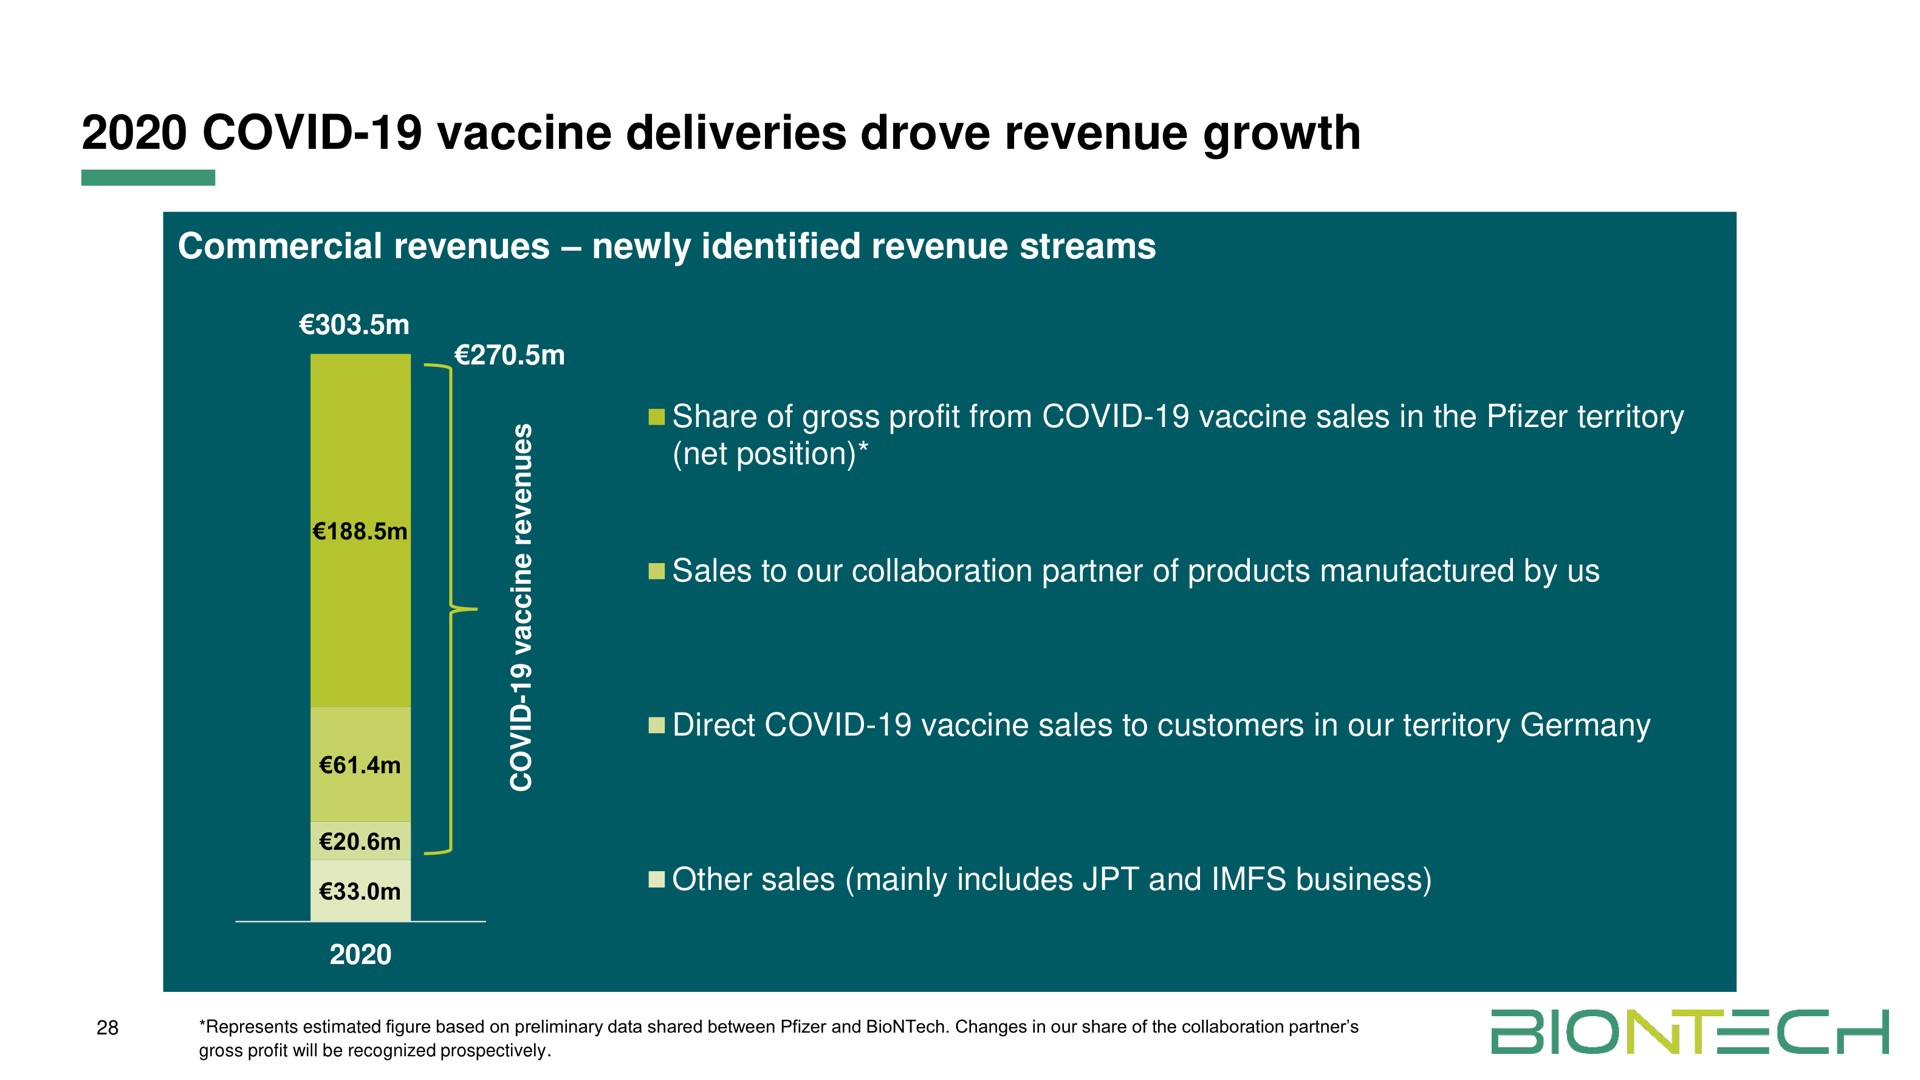 covid vaccine deliveries drove revenue growth | BioNTech